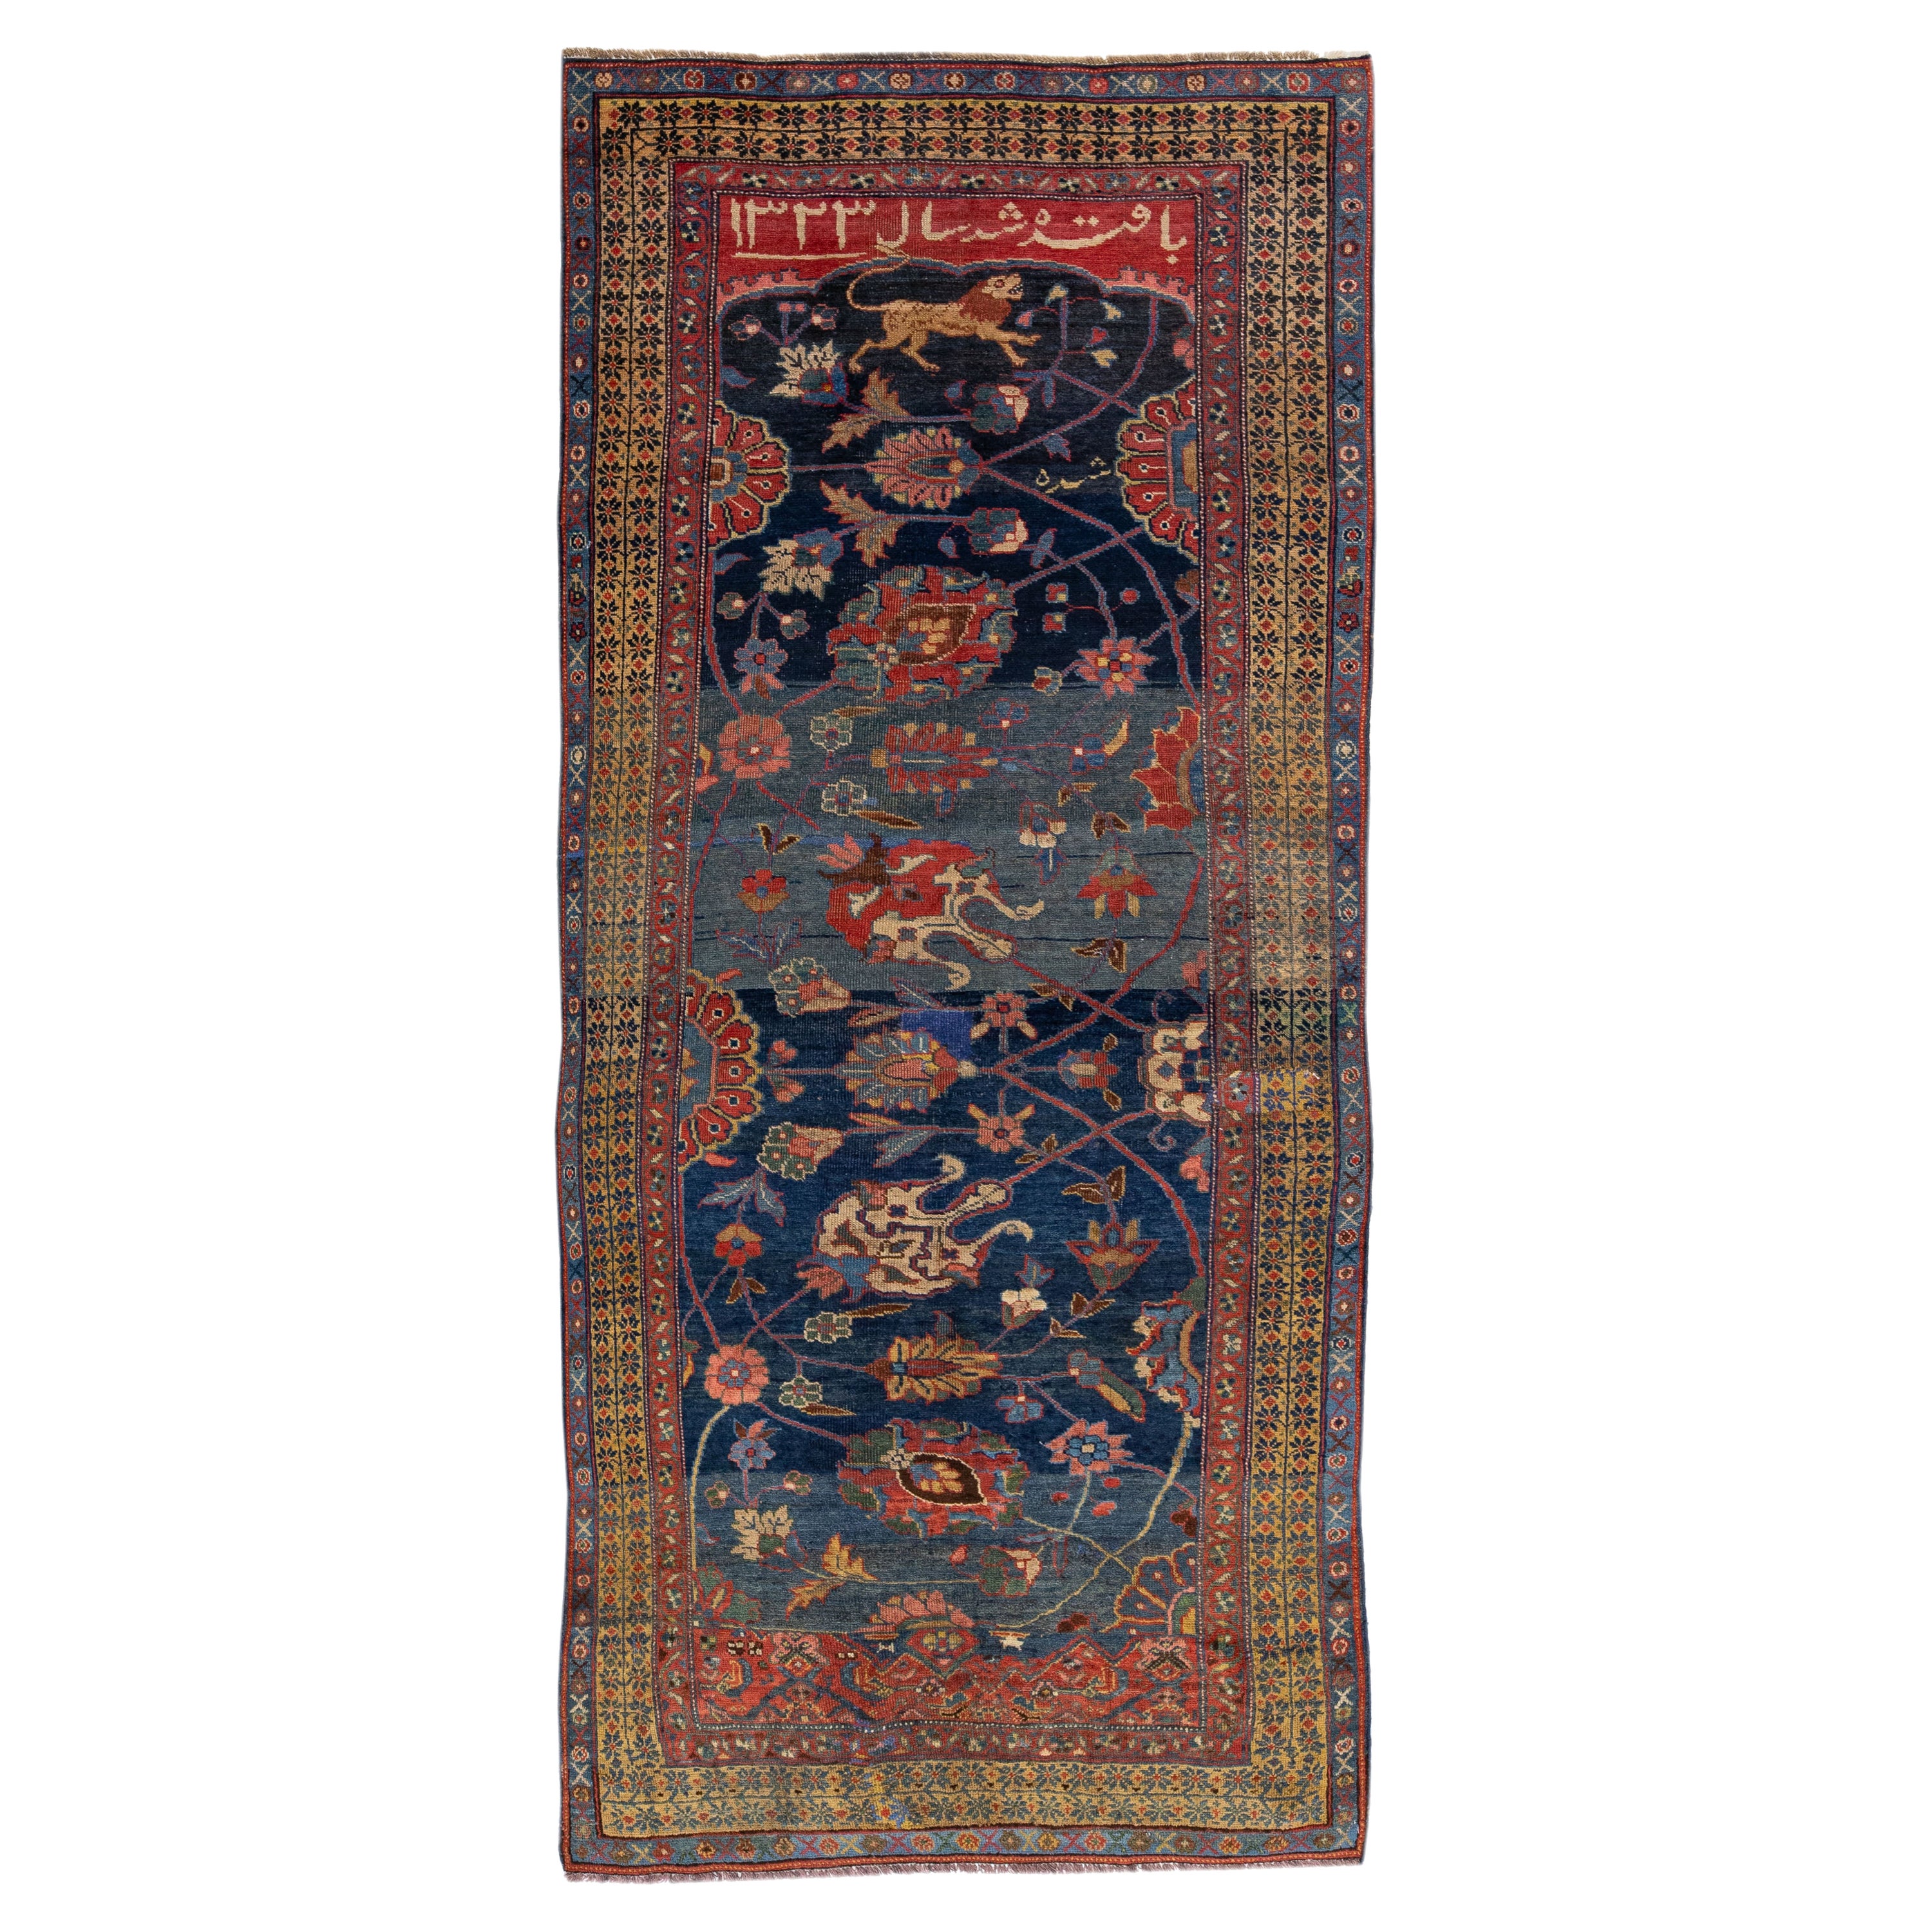 Blue Antique Persian Bidjar Handmade Scatter Wool Rug with Floral Motif